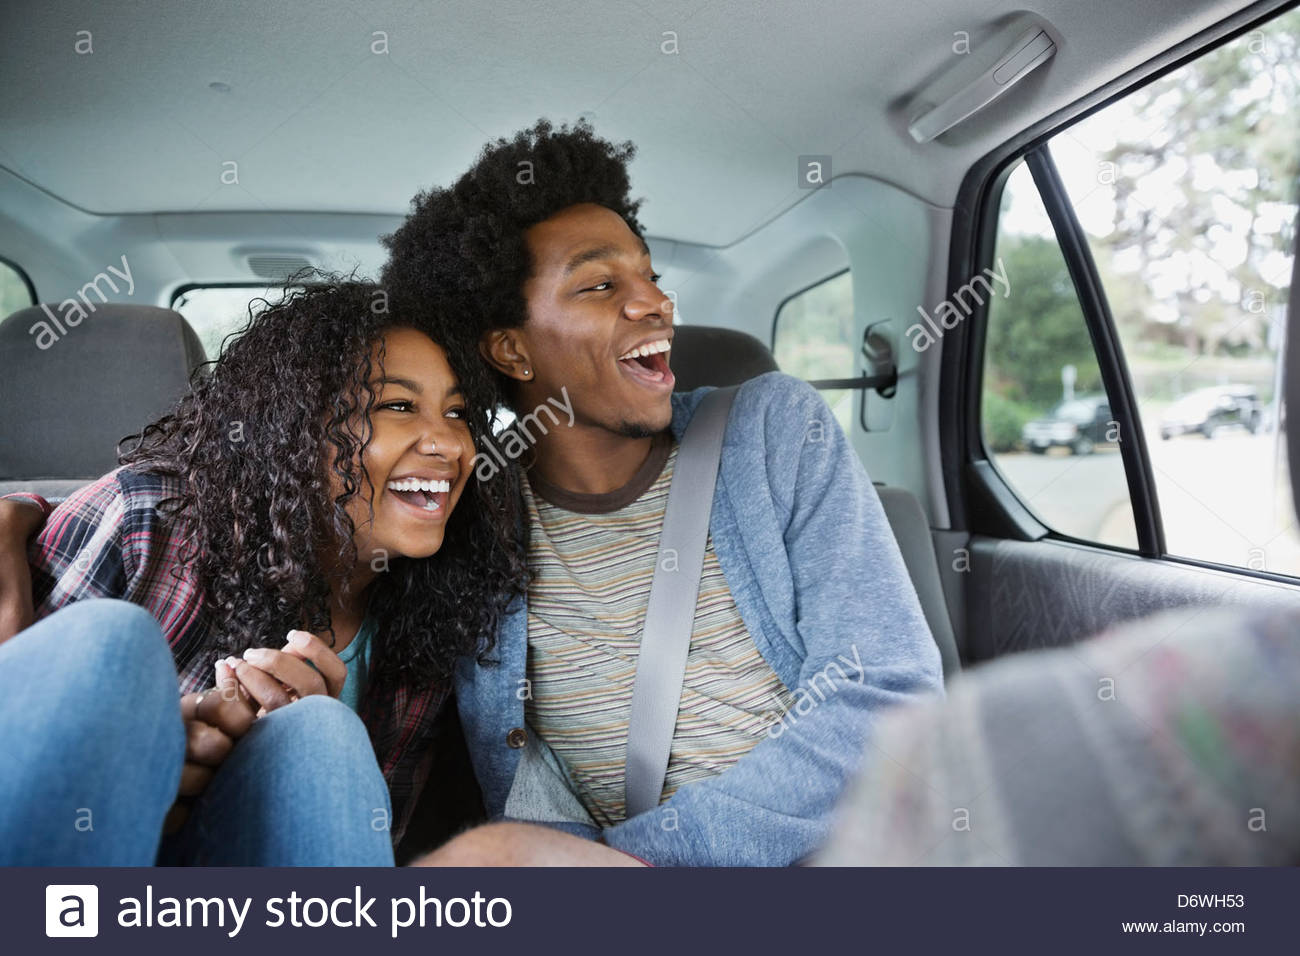 Cheerful couple looking through window while enjoying road trip Stock Photo